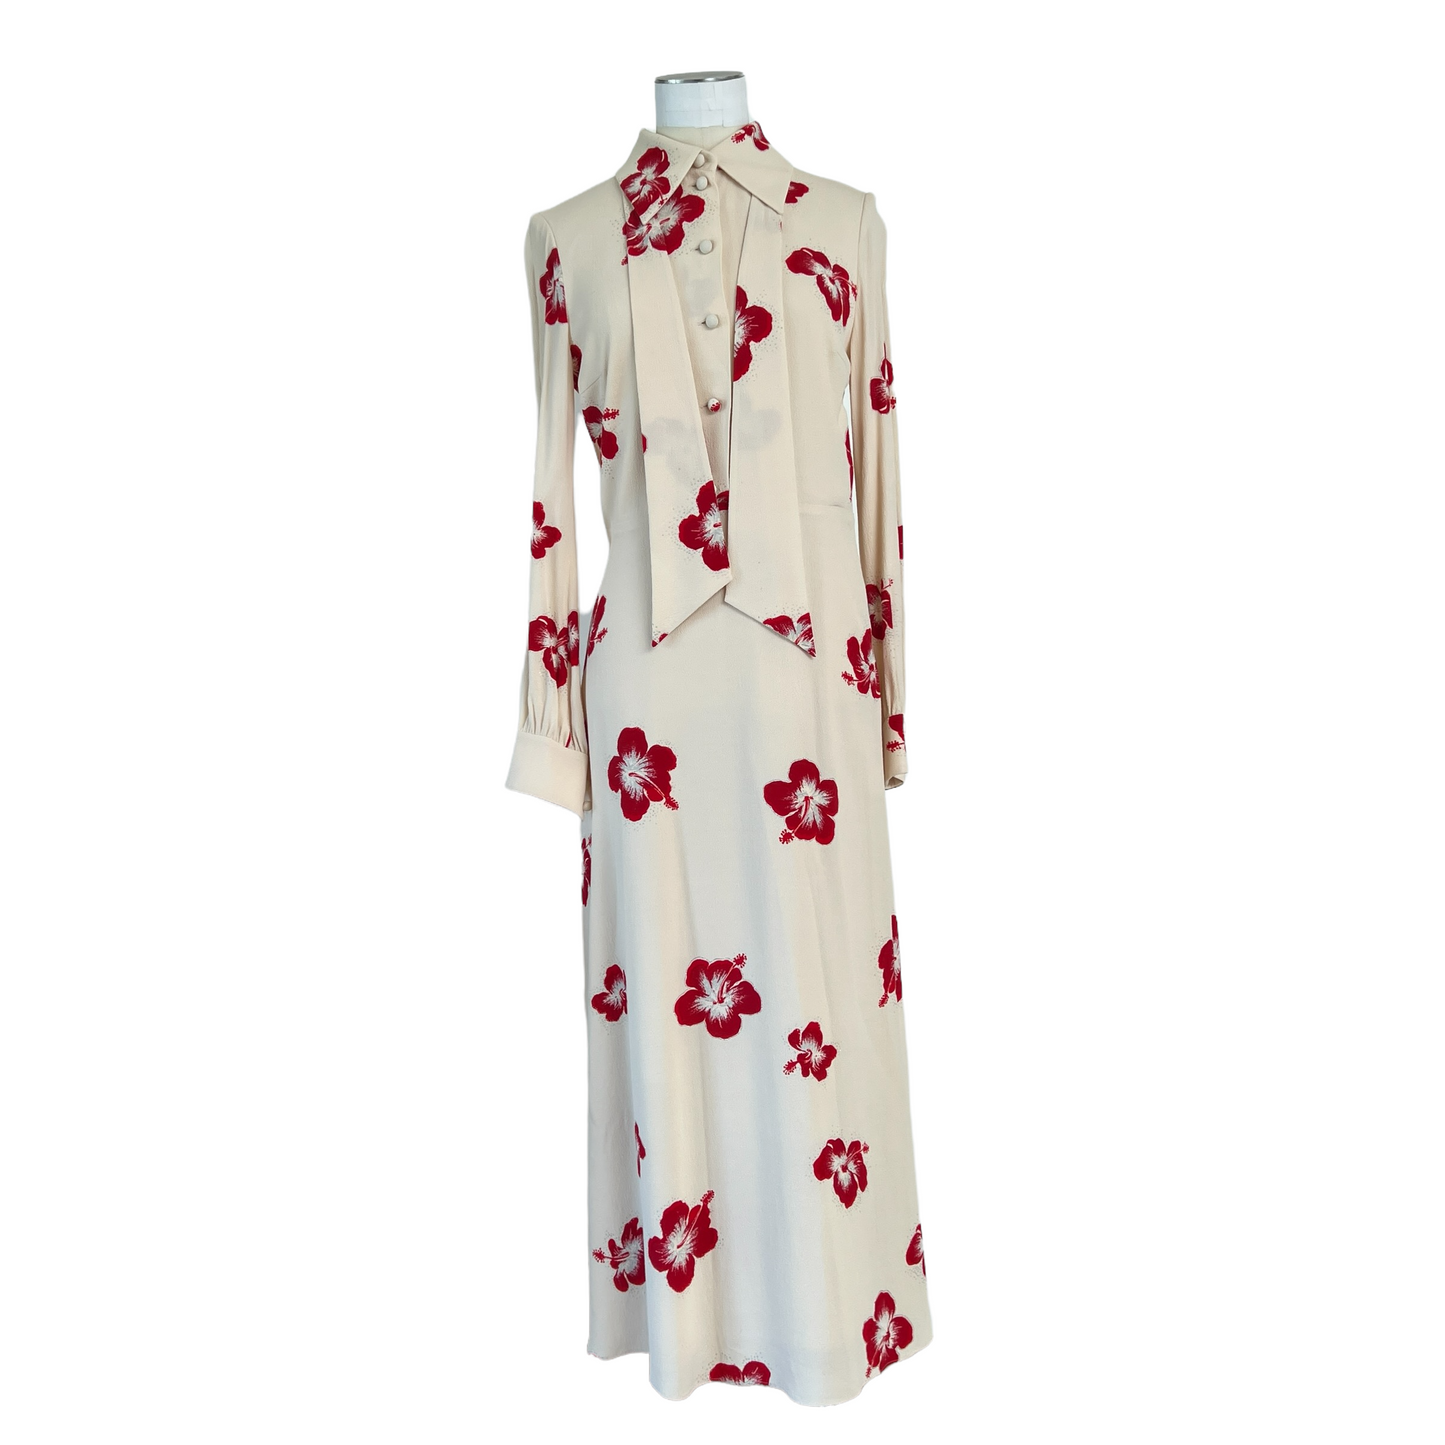 Long Cream and Flower Dress - 36